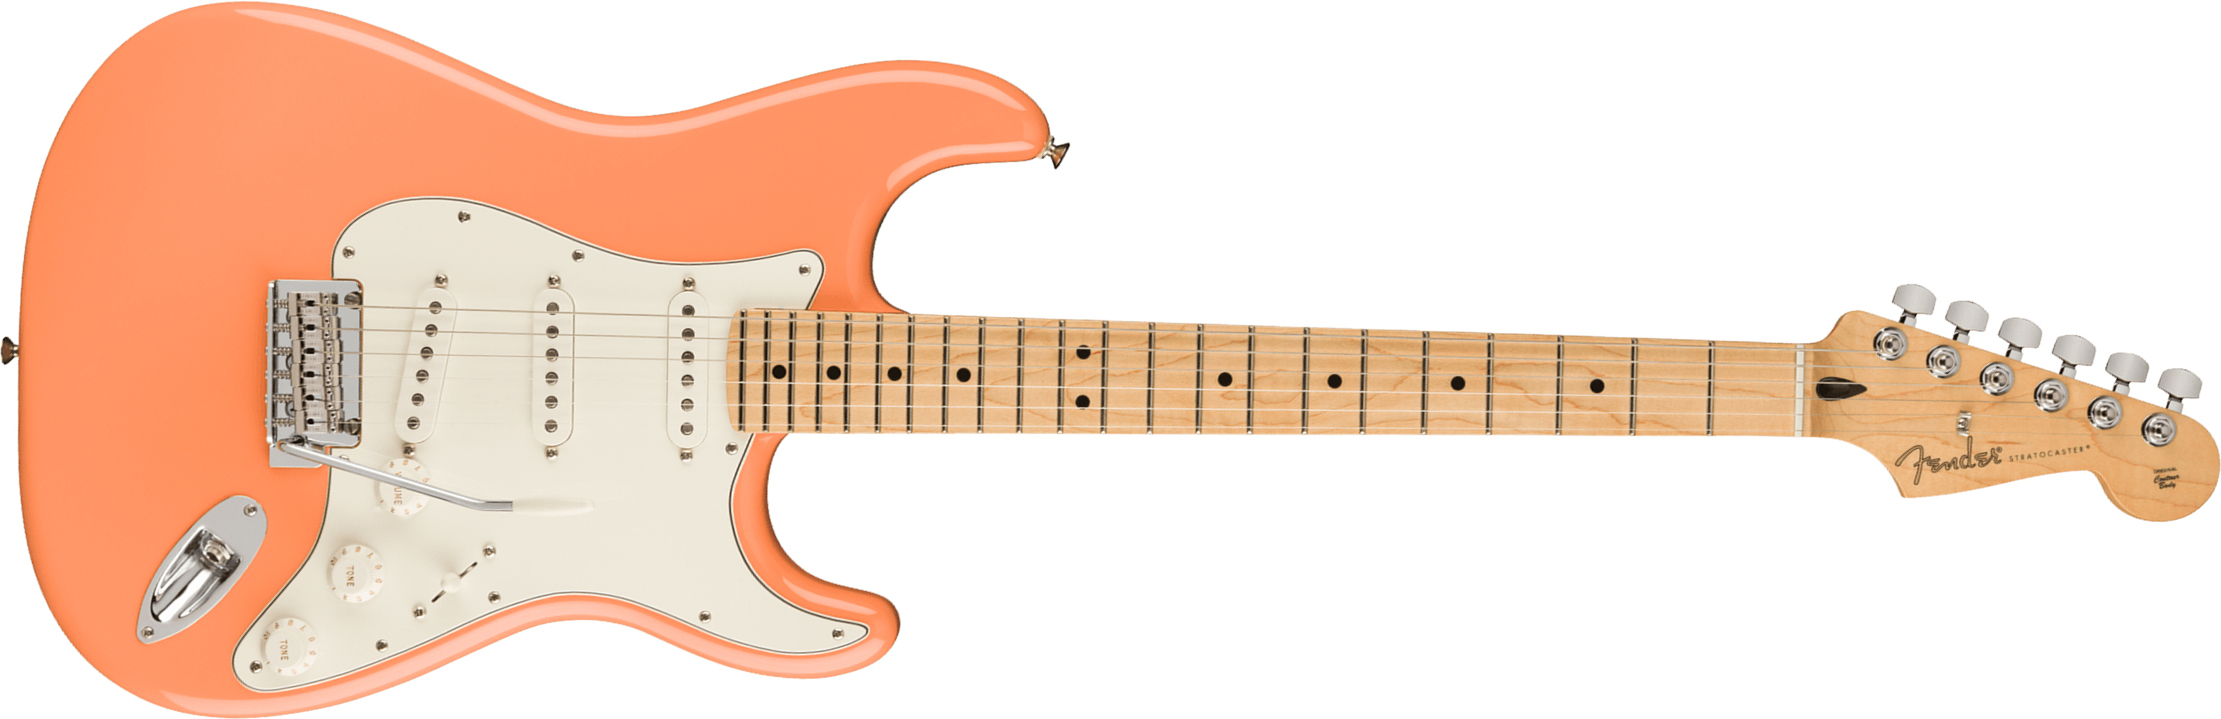 Fender Strat Player Ltd Mex 3s Trem Mn - Pacific Peach - Str shape electric guitar - Main picture